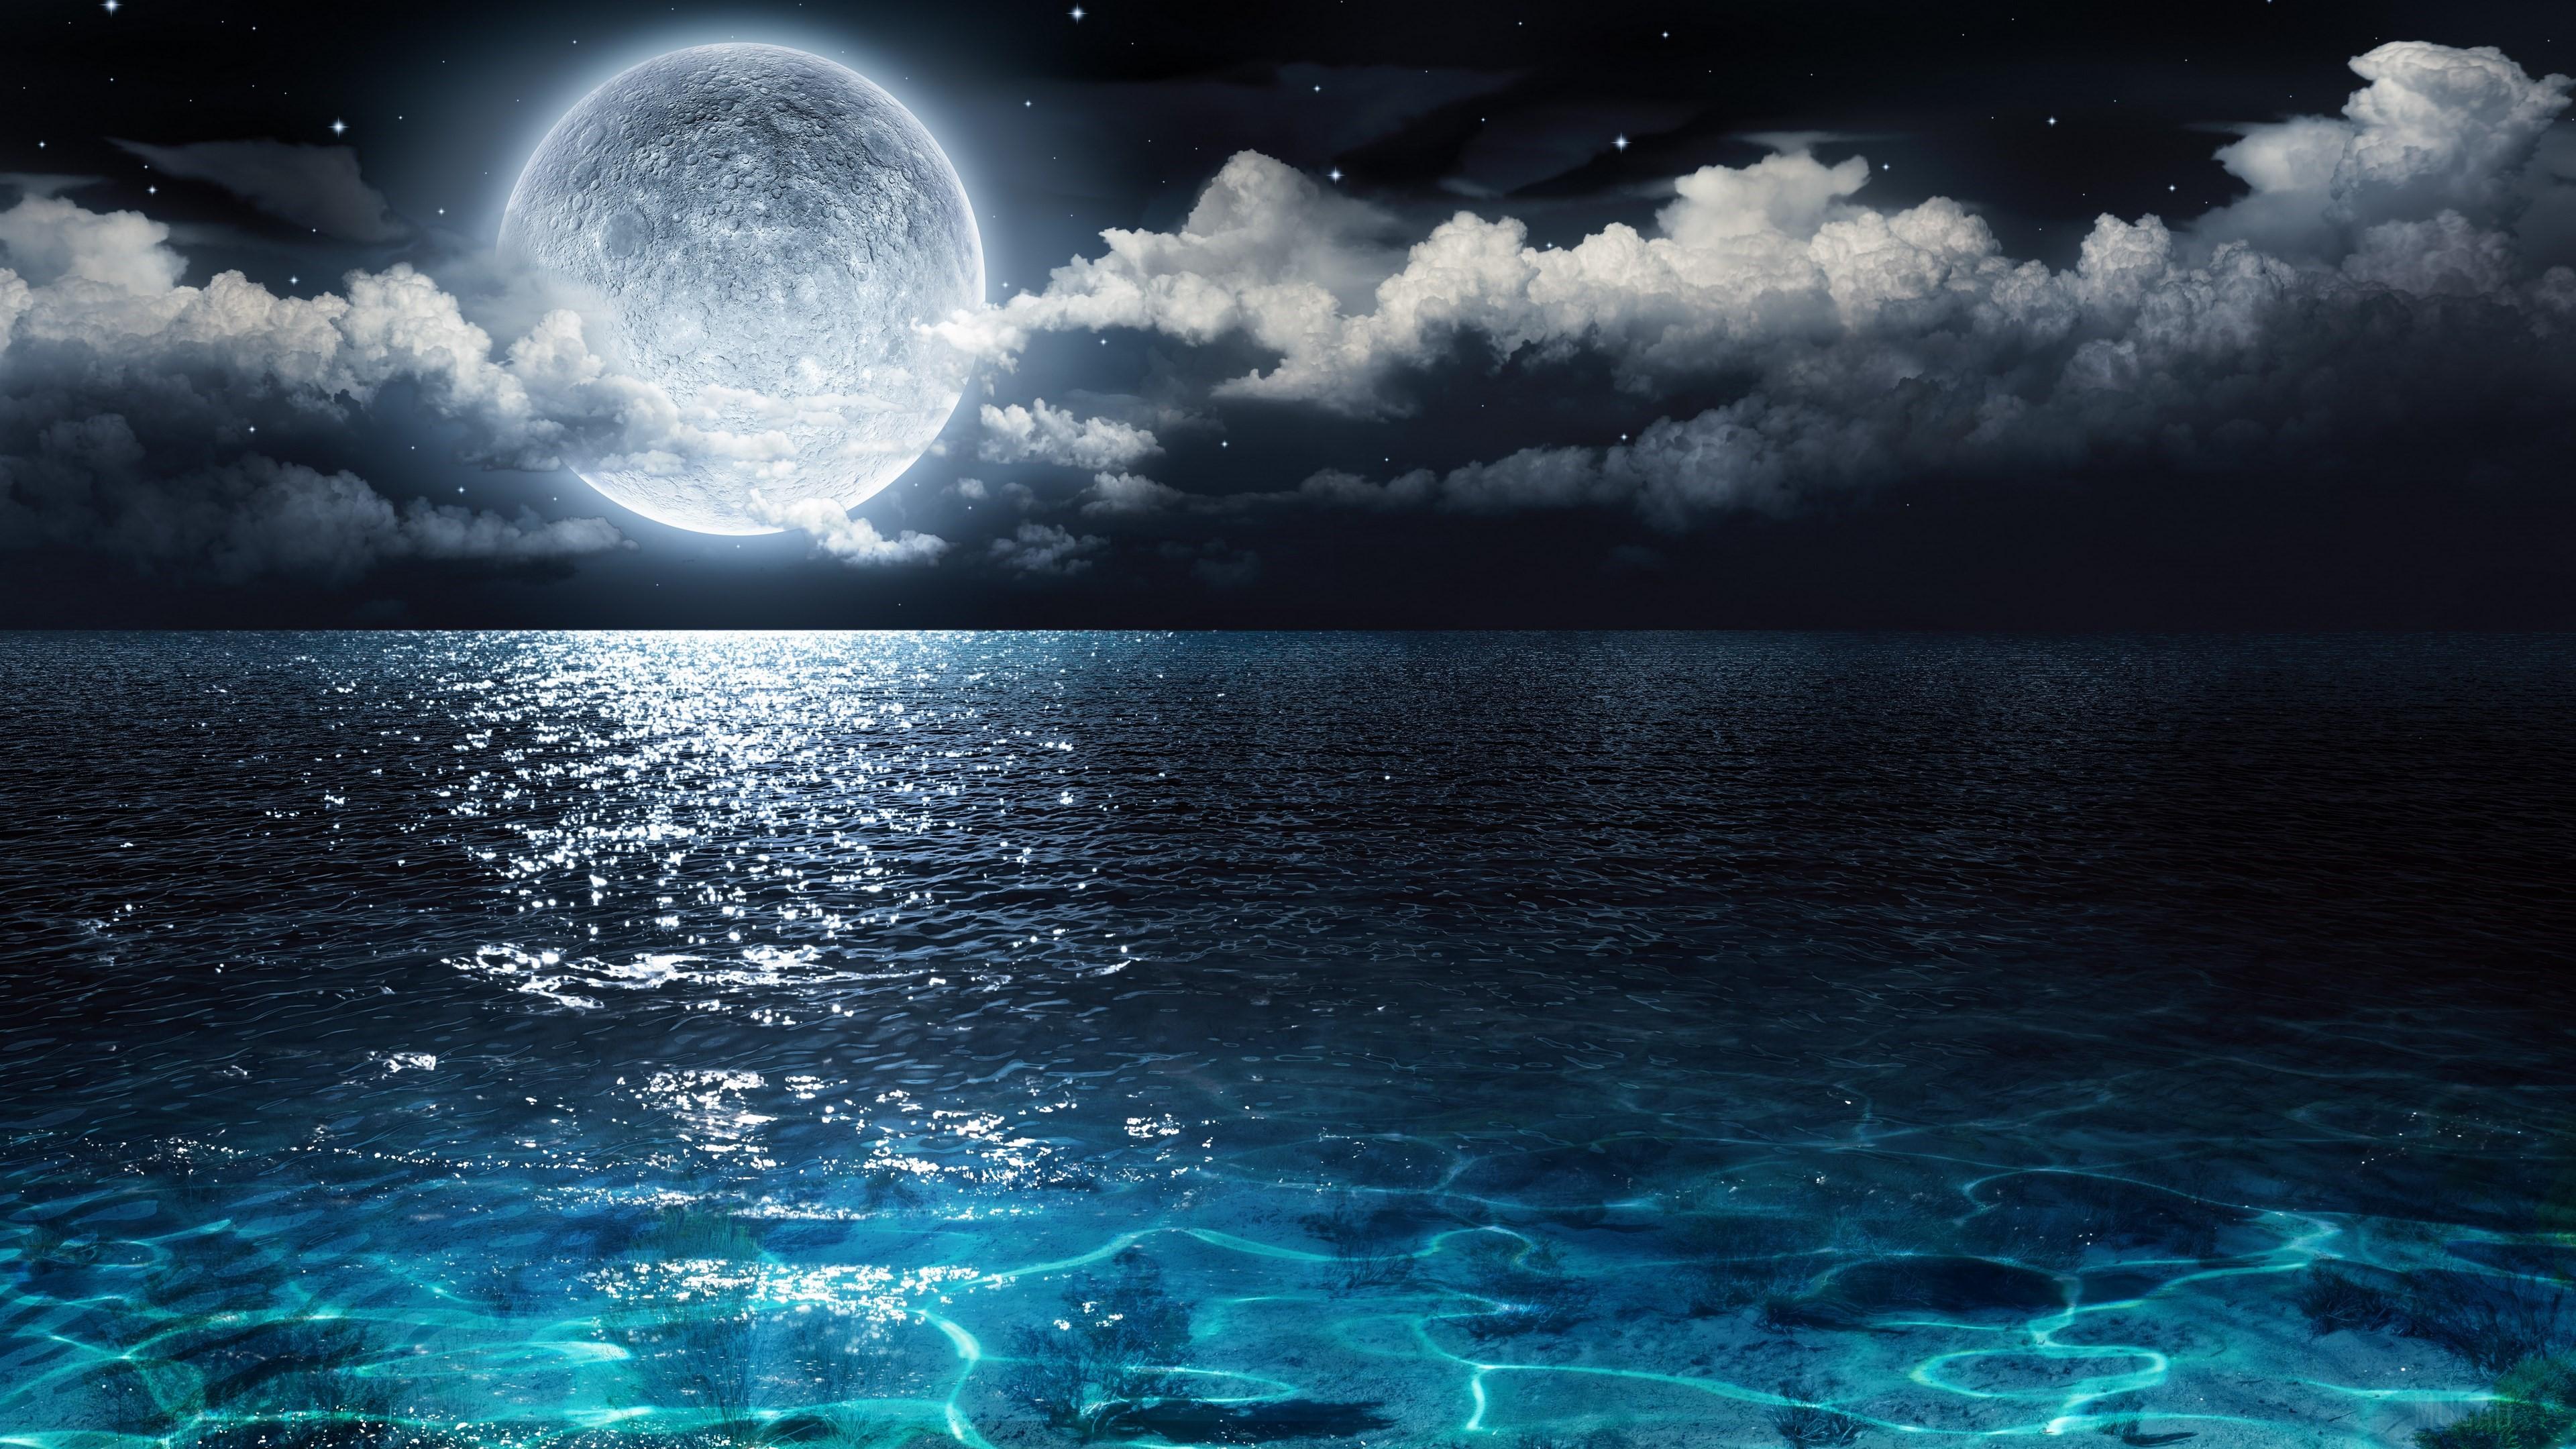 Blue Night Ocean Wallpapers Top Free Blue Night Ocean Backgrounds